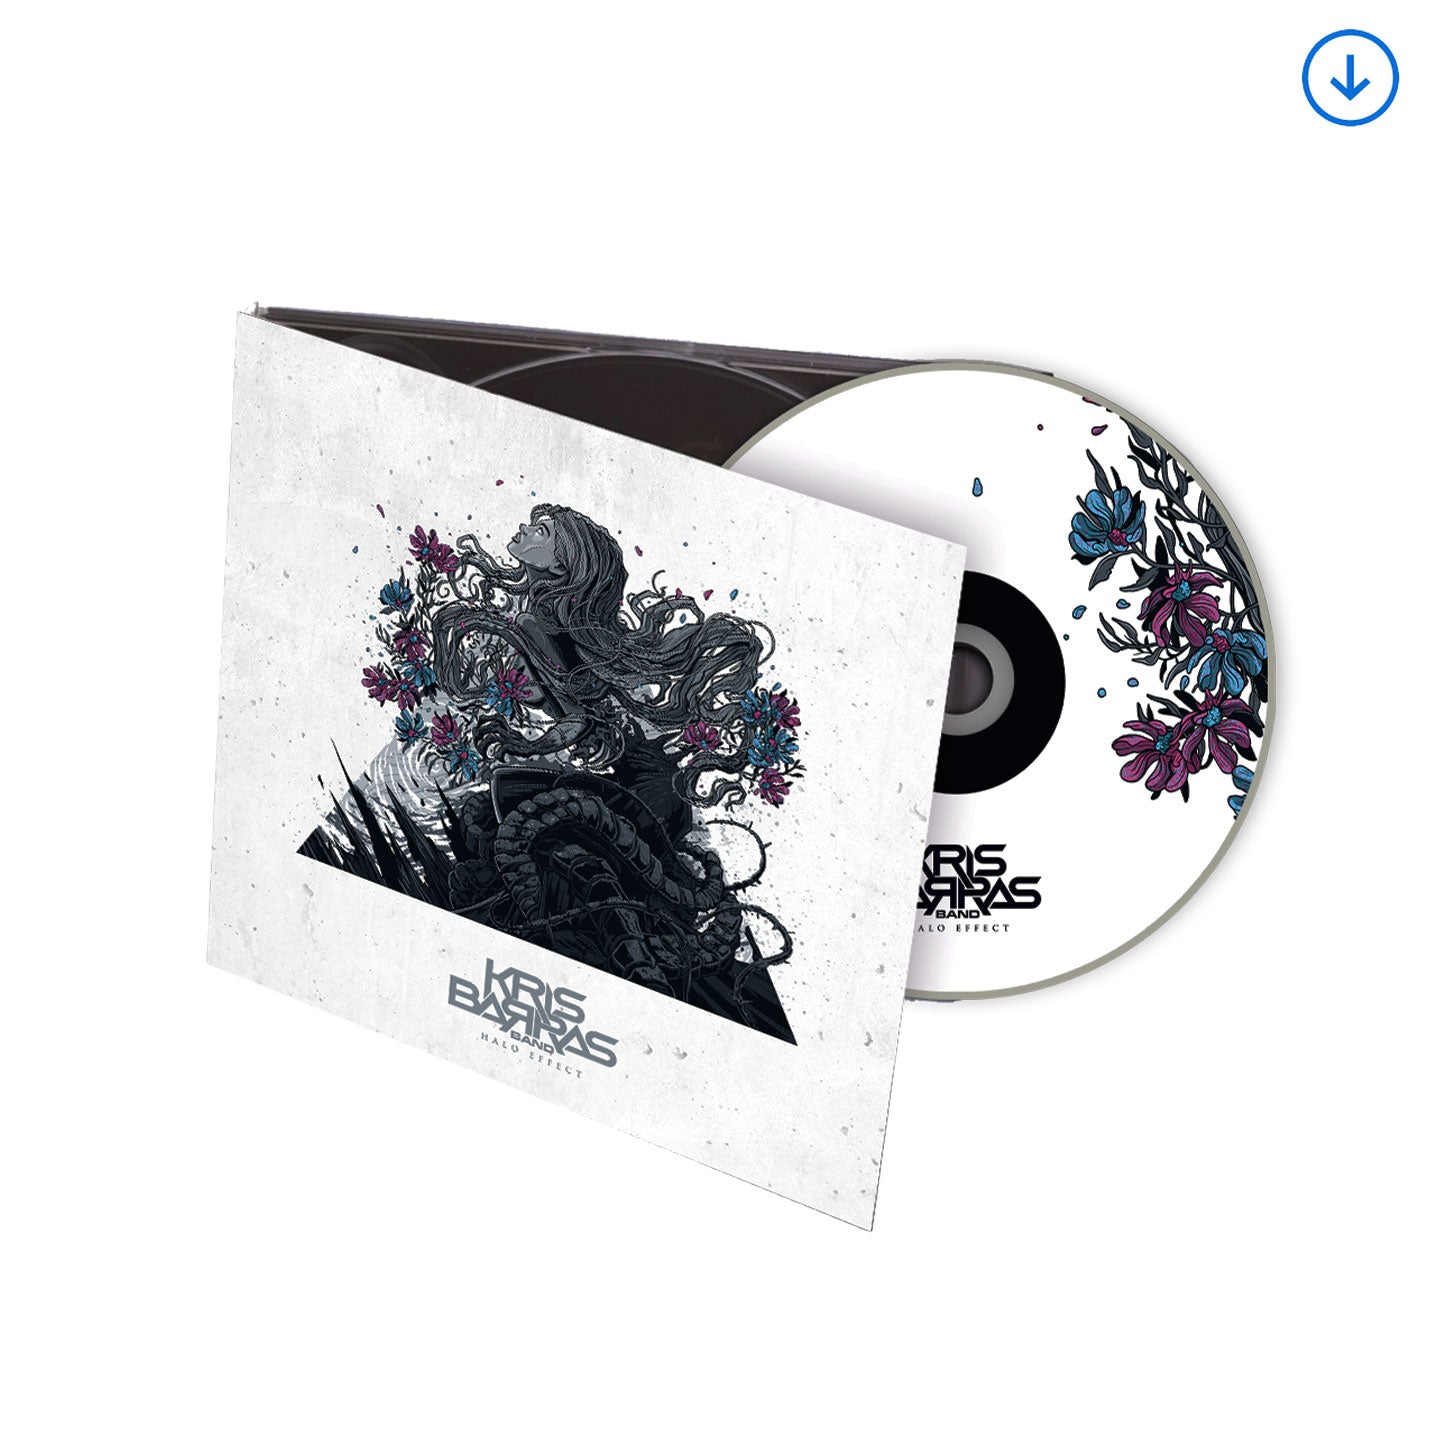 Kris Barras Band "Halo Effect" Digipak CD + Download